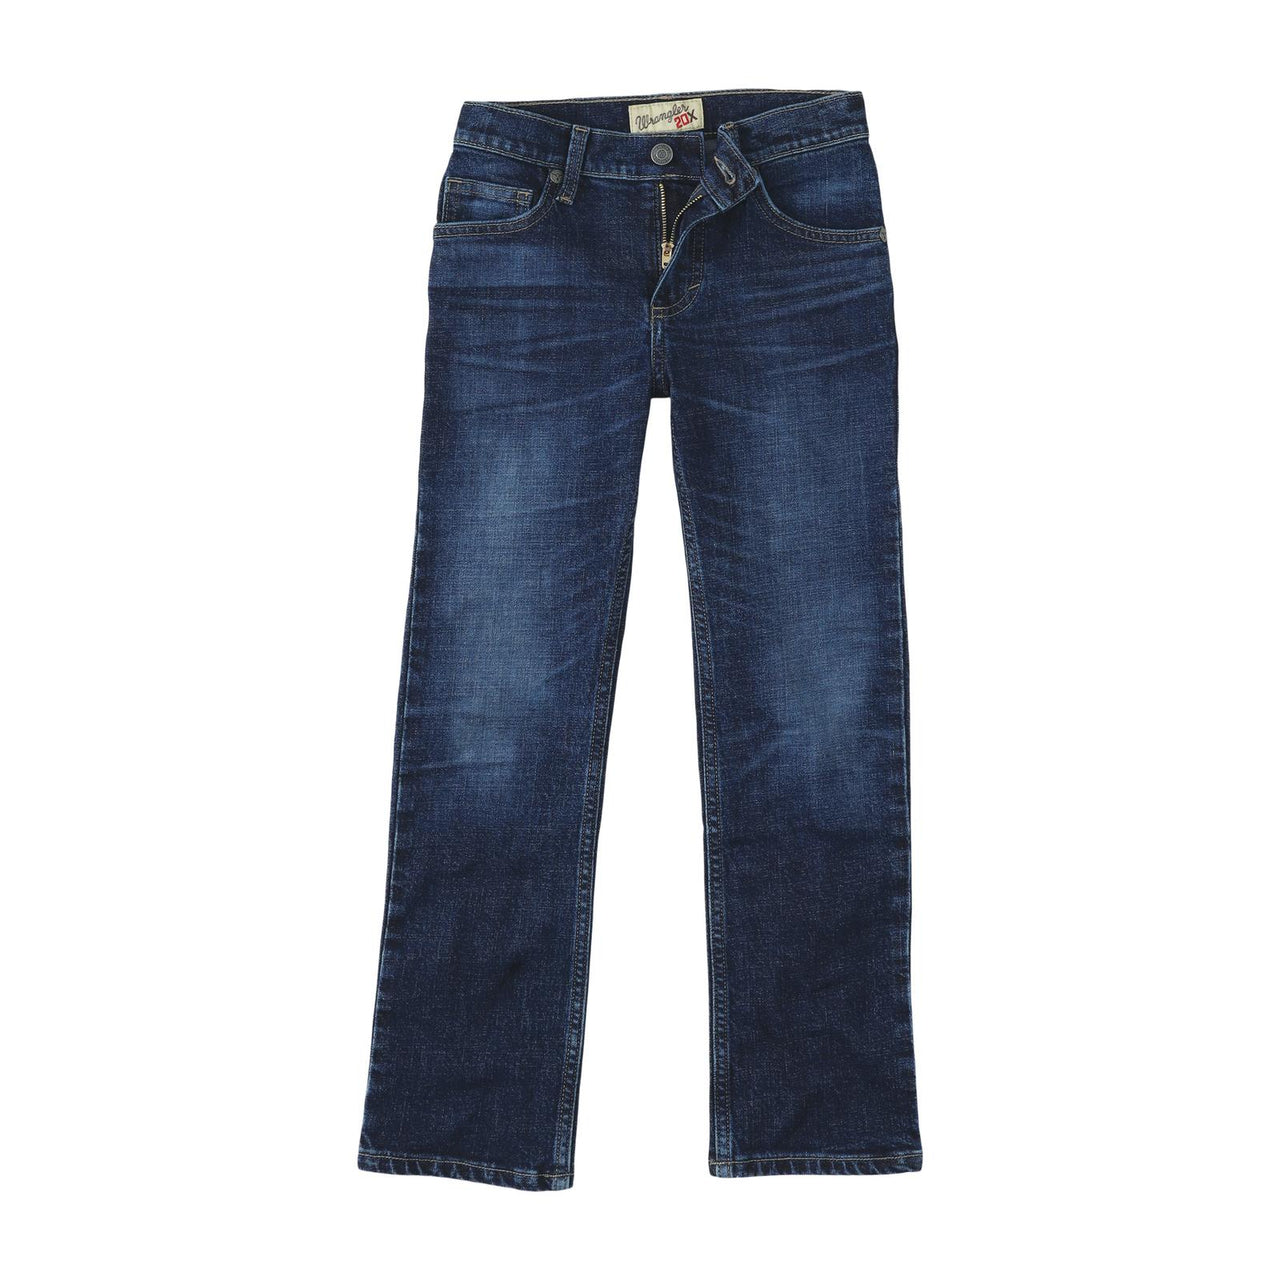 Wrangler Boys 20X 44 Slim Straight Jeans - Blueberry Gardens